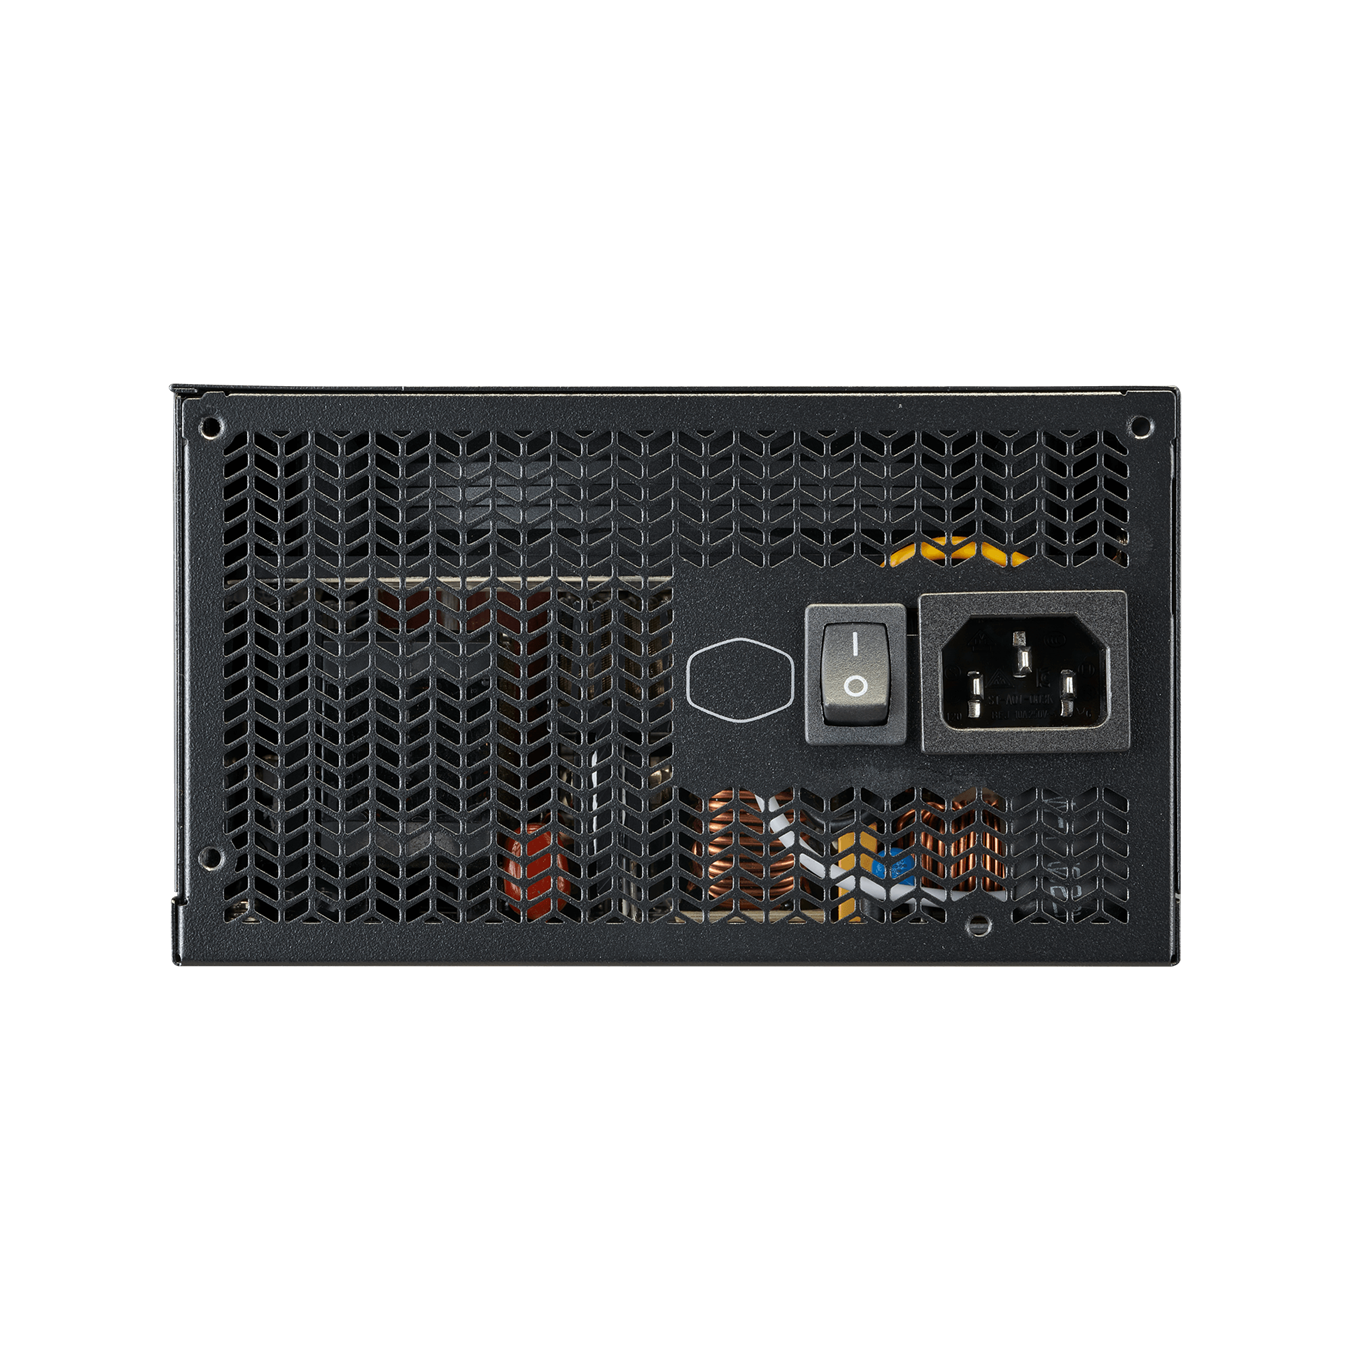 XG750 Plus Platinum - Power switch and socket